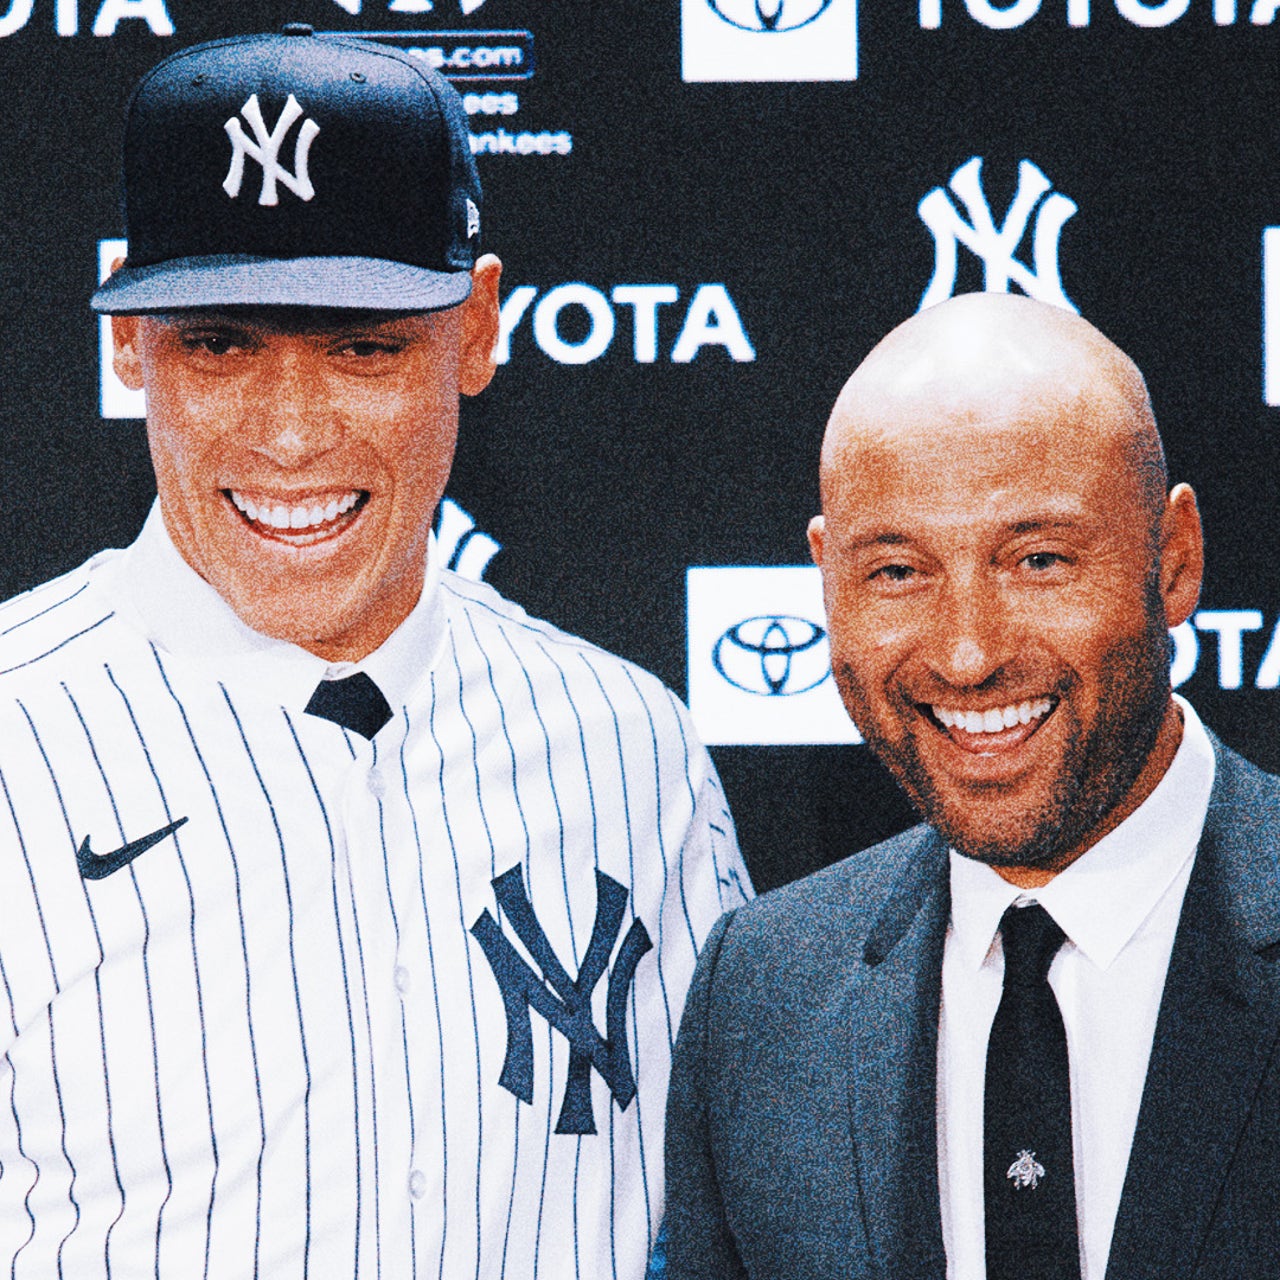 Derek Jeter Addresses Infamous Feud With Former MLB Teammate Alex Rodriguez